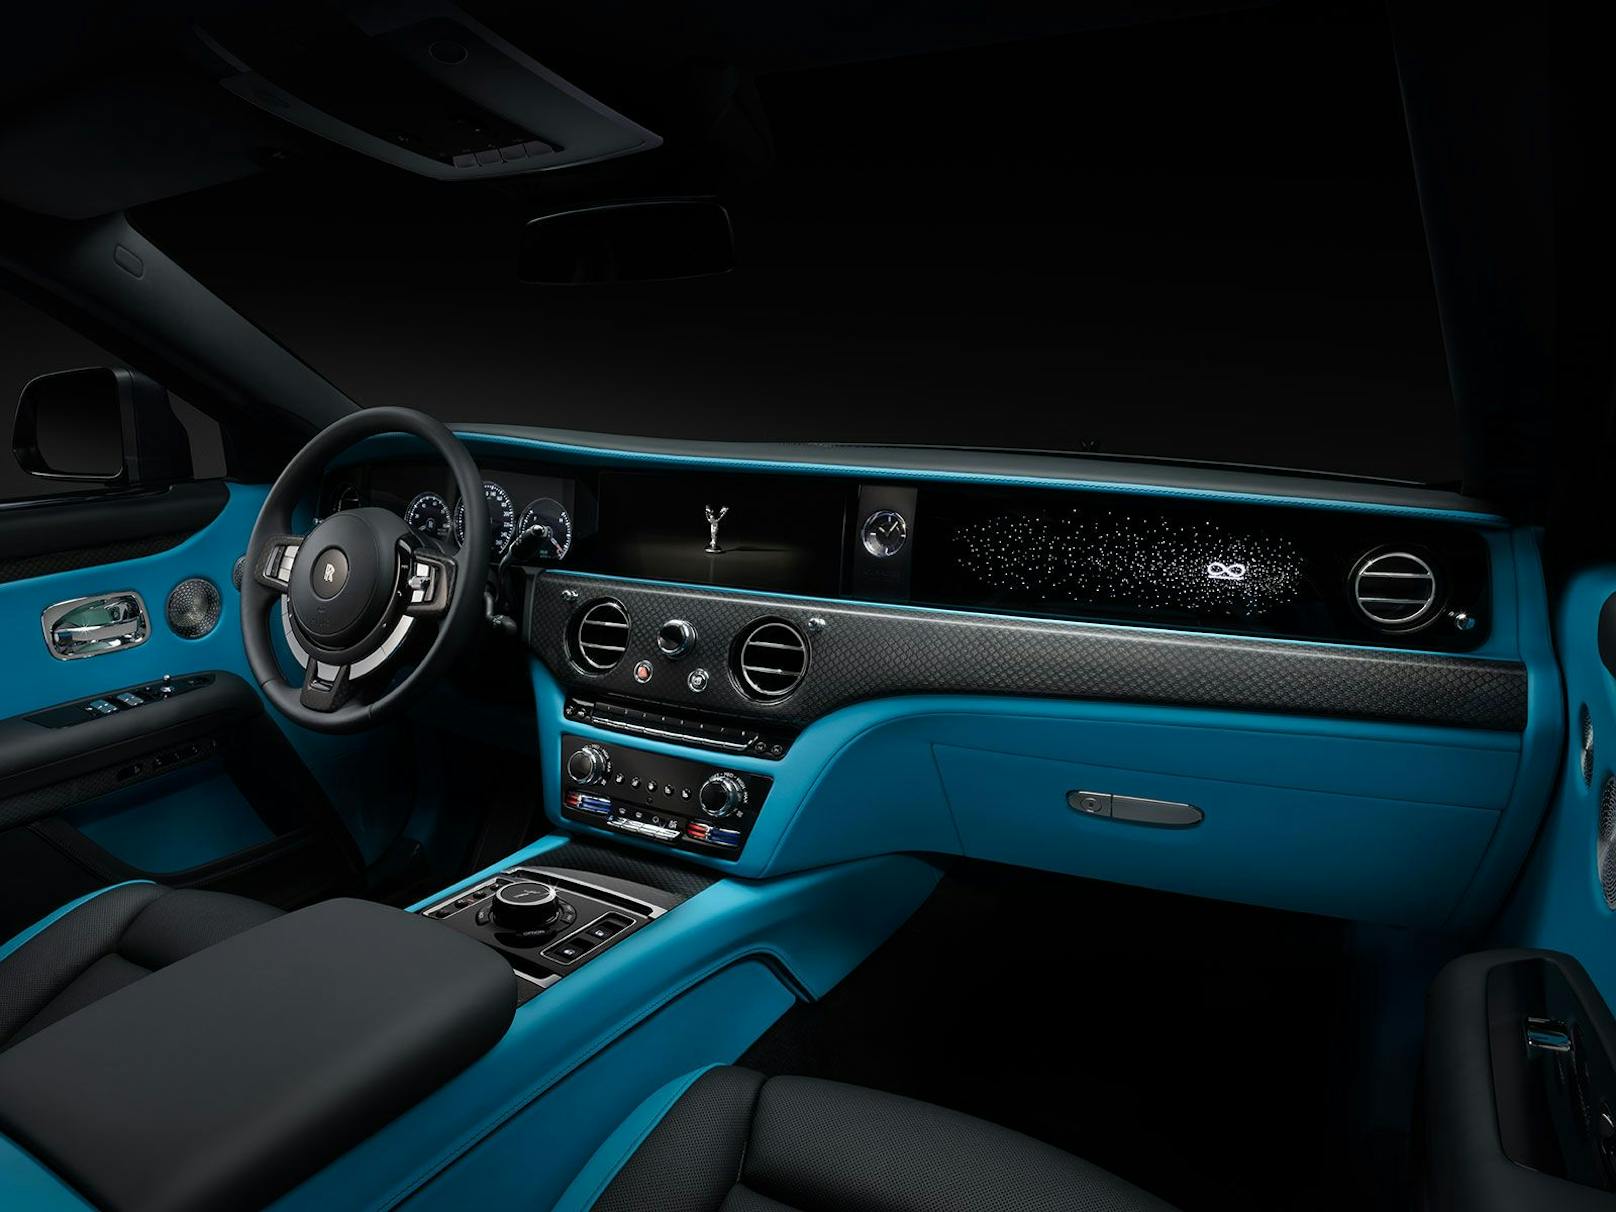 Farbenfrohe Akzente im Innenraum des Rolls Royce Ghost Black Badge